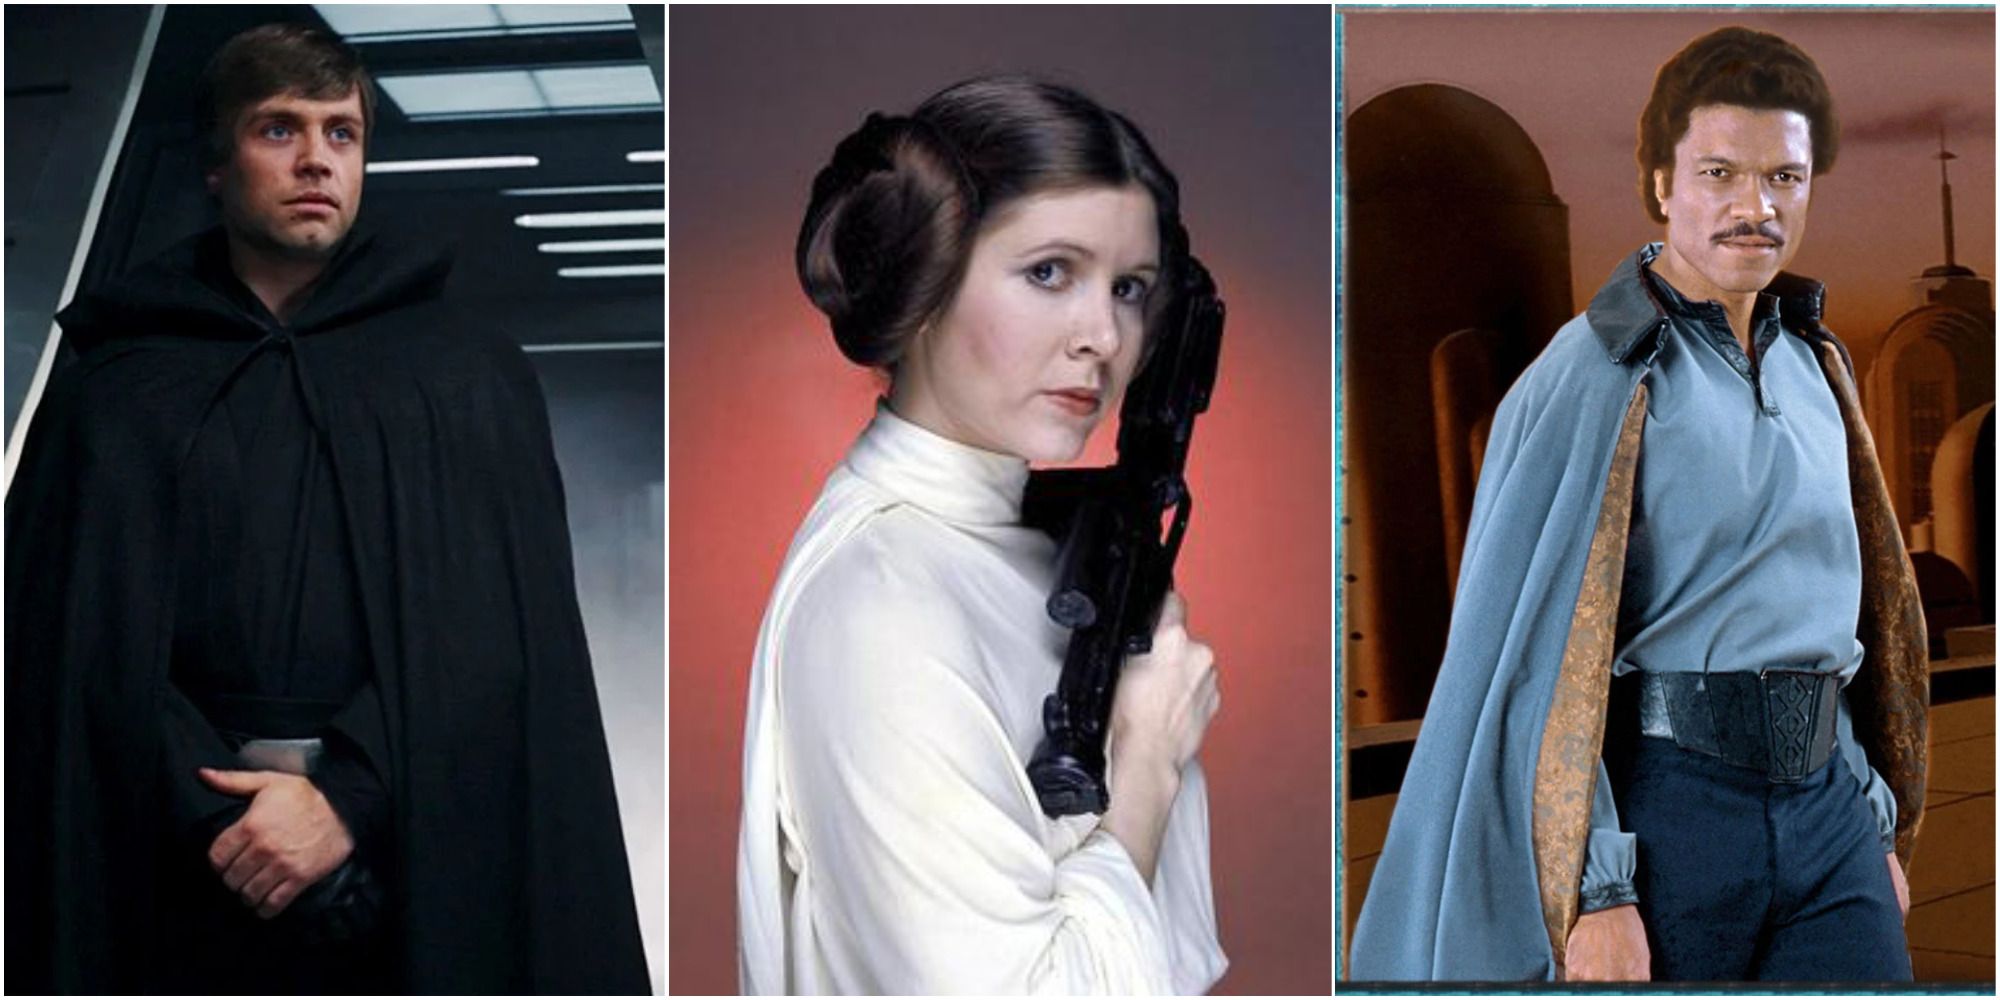 Luke Skywalker, Leia Organa, Lando Calrissian